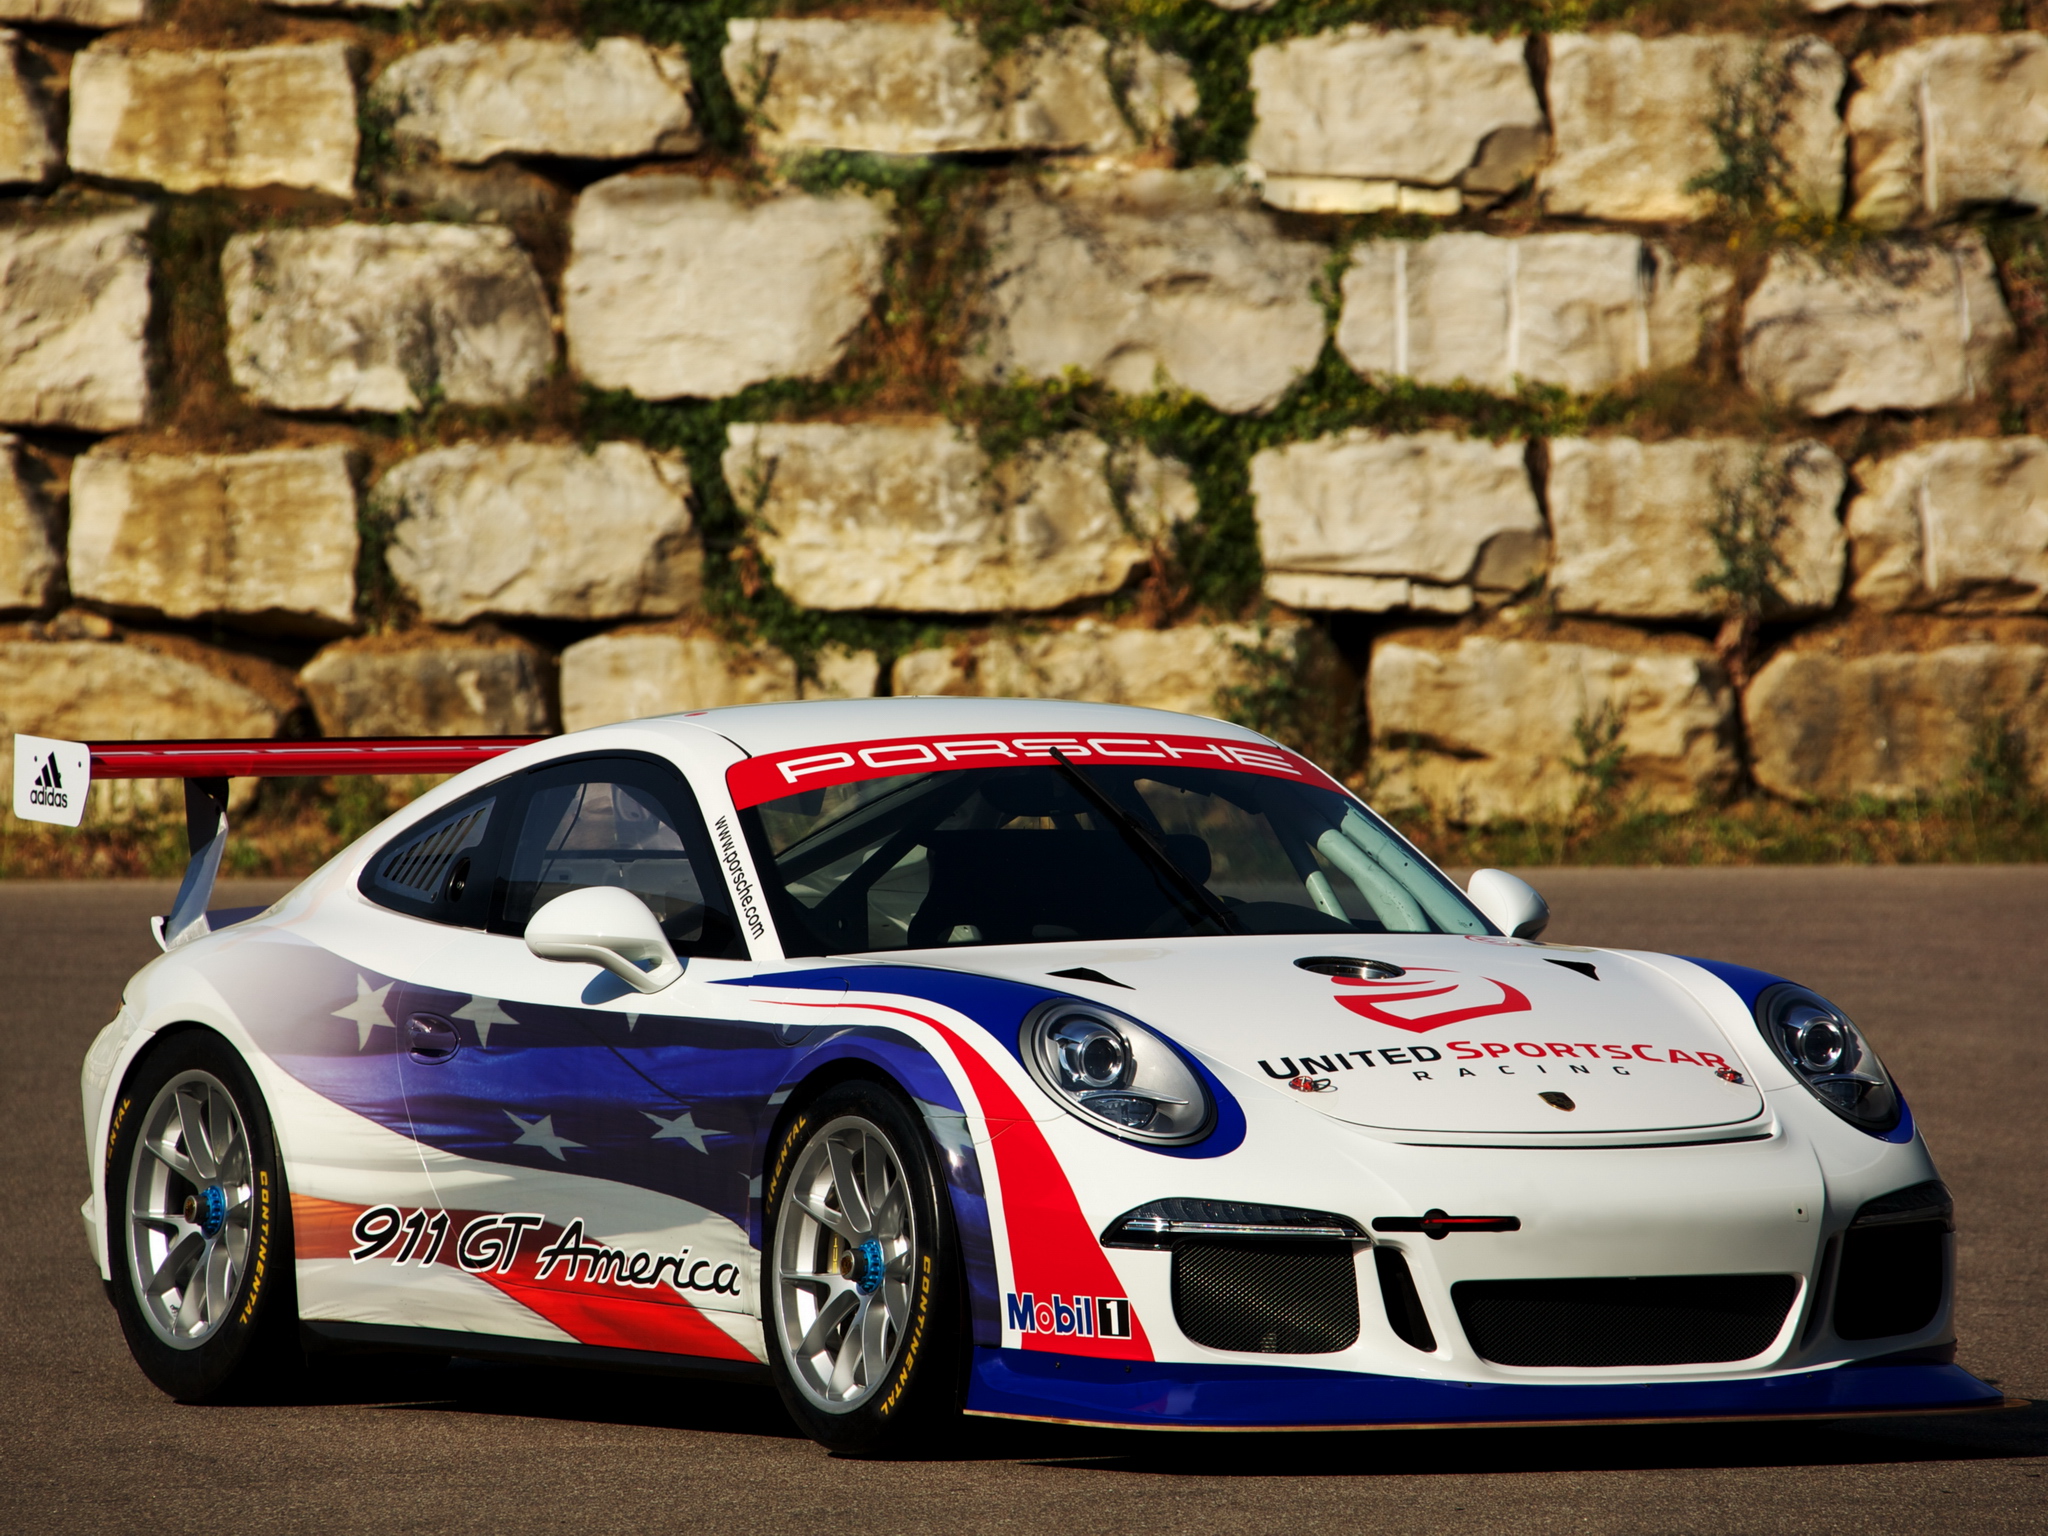 2013, Porsche, 911, G t, America, 991, Supercar Wallpaper